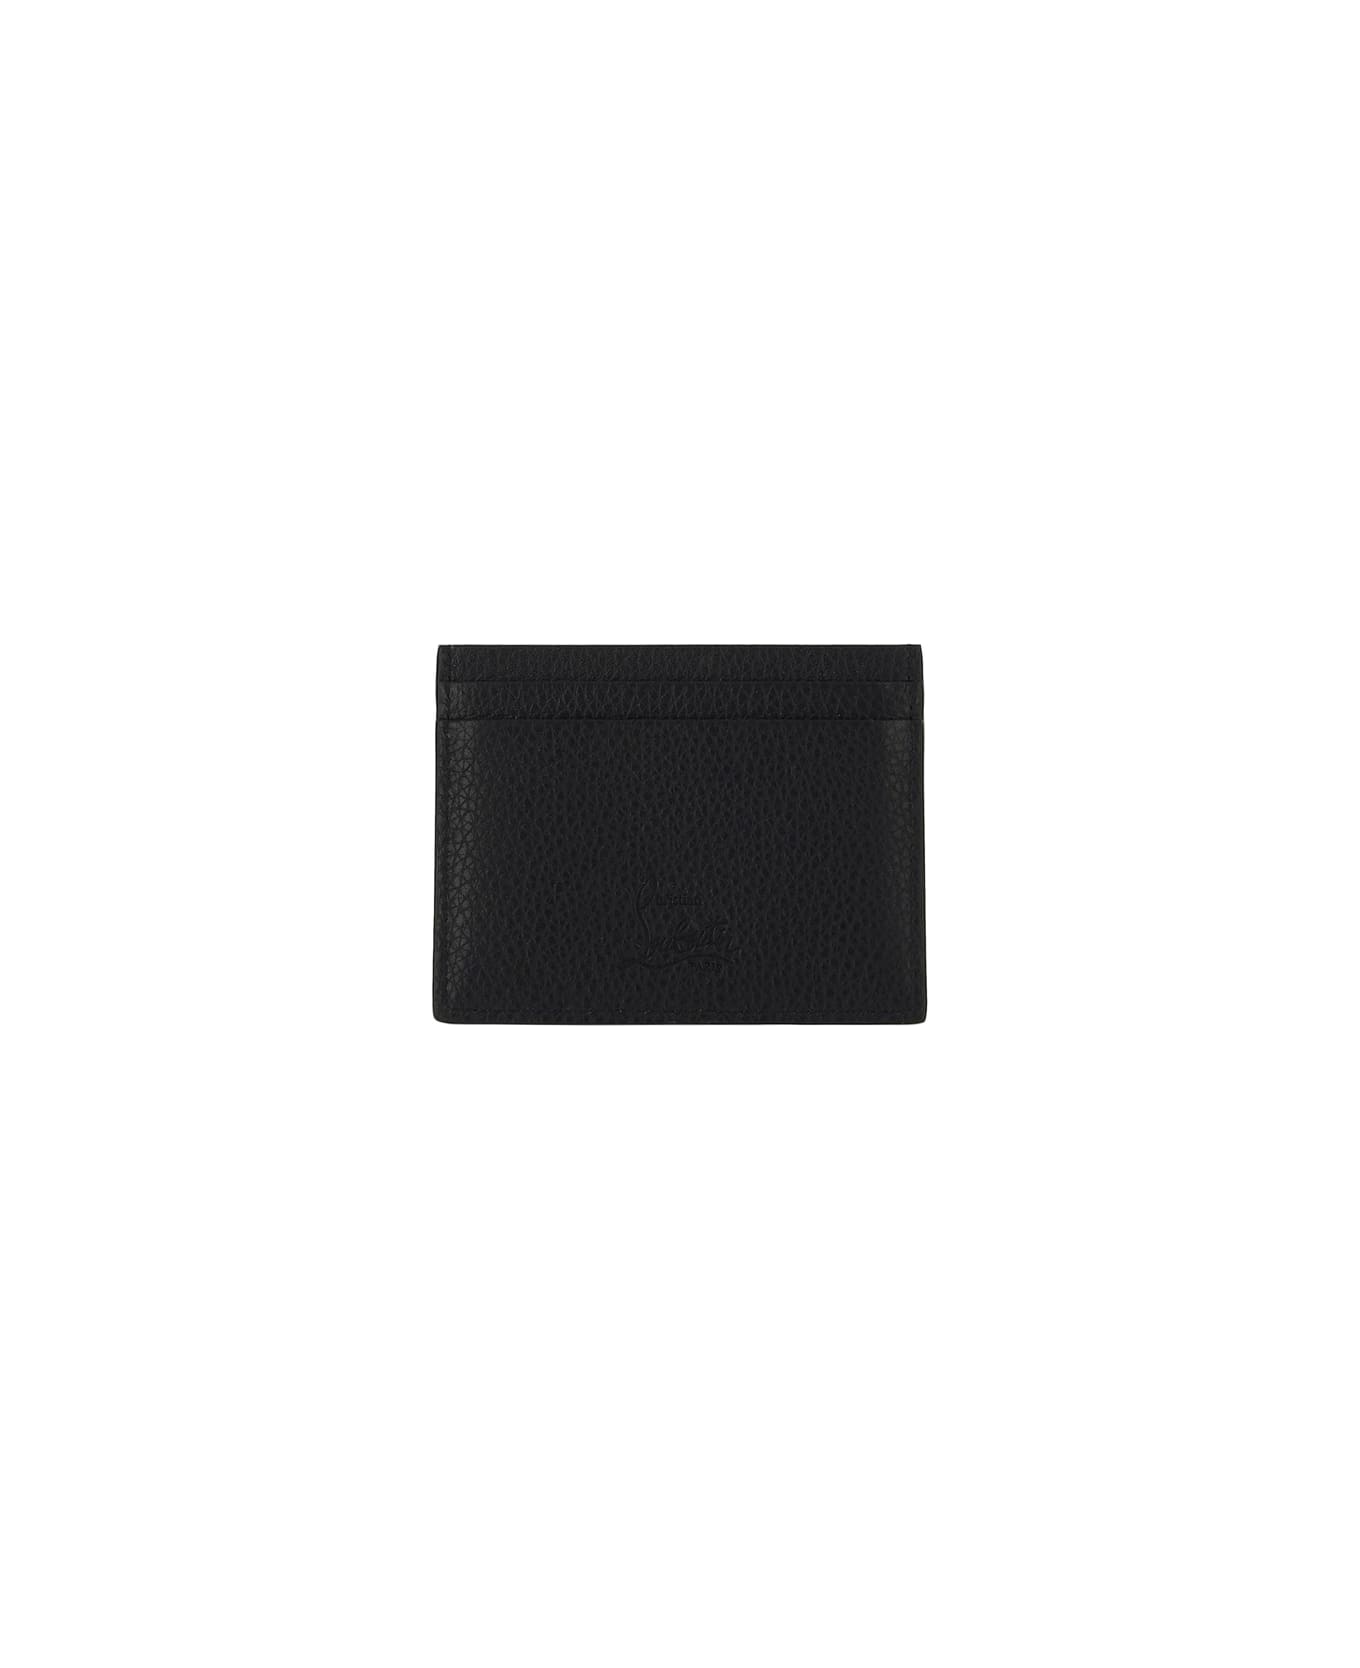 Christian Louboutin Kios Card Holder - Black/black